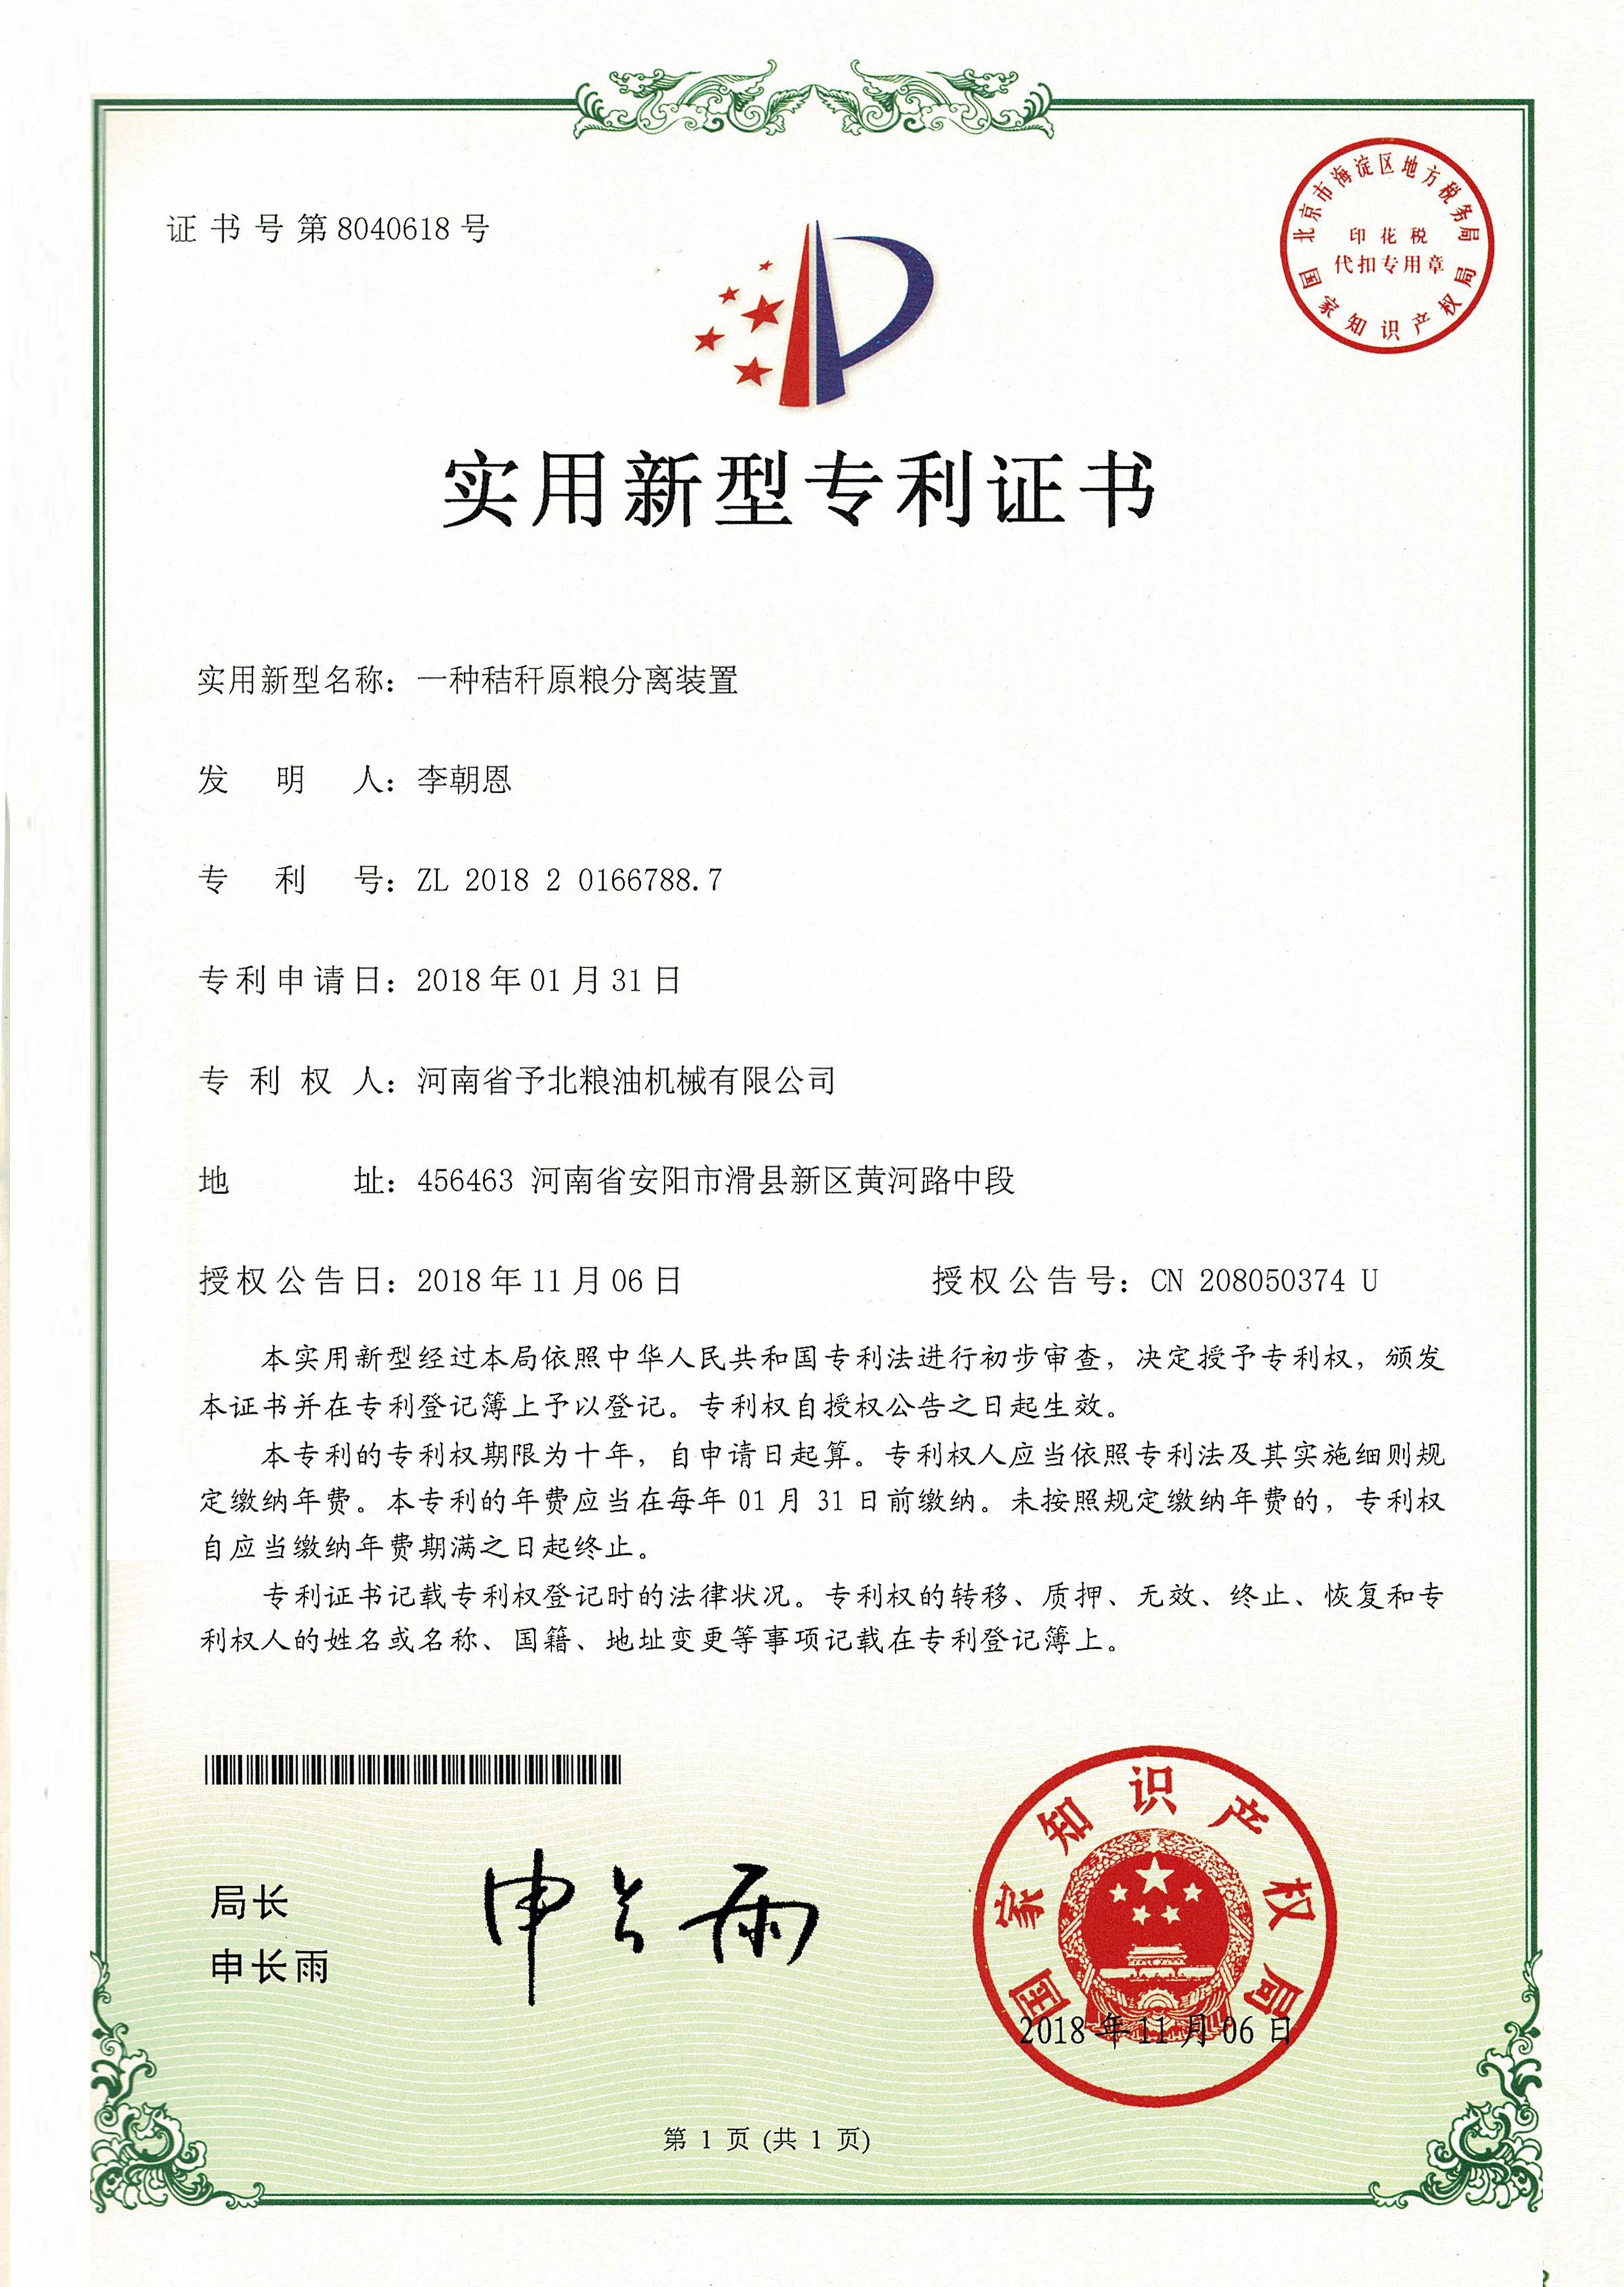 Patent certificate(图1)